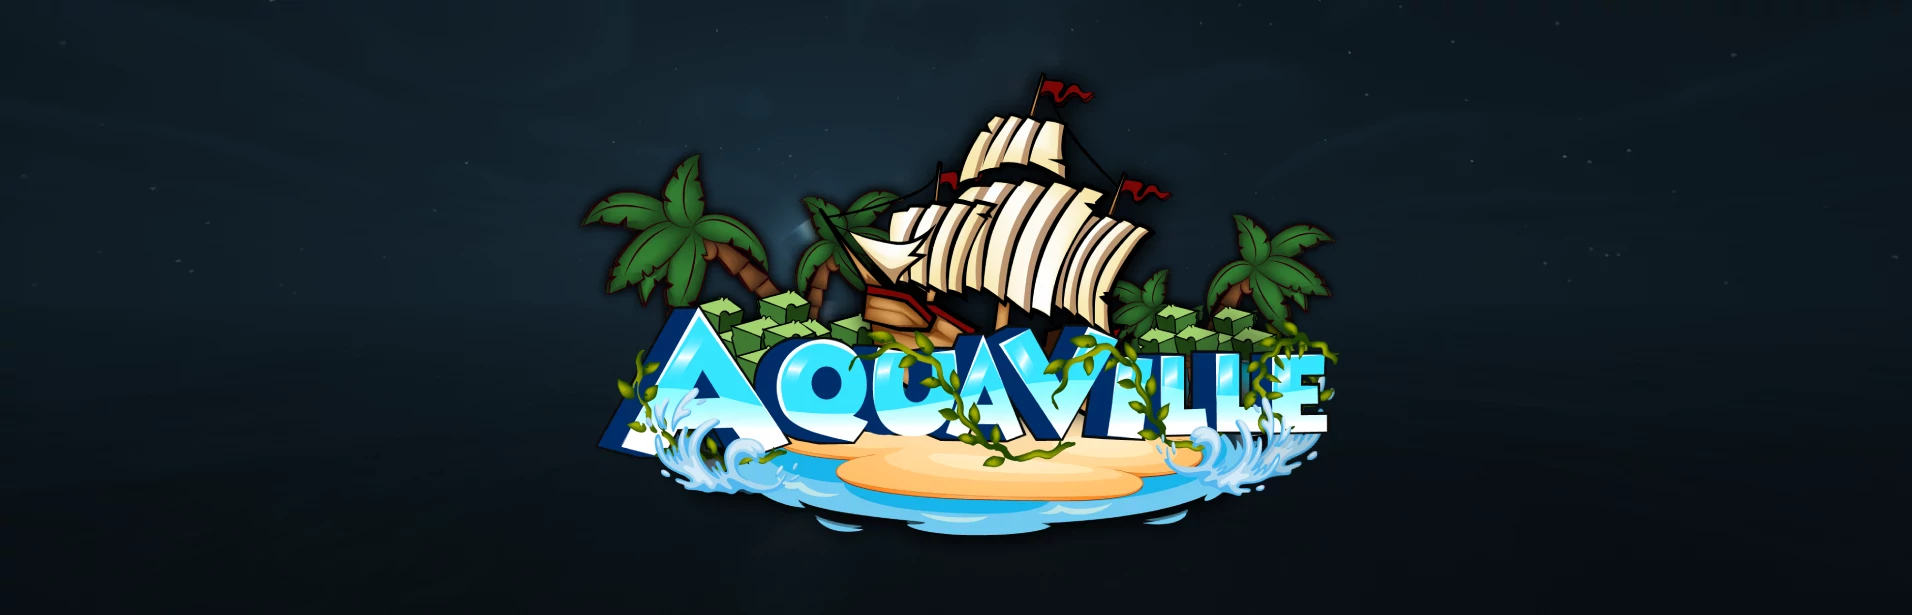 Aquaville - Survival_background